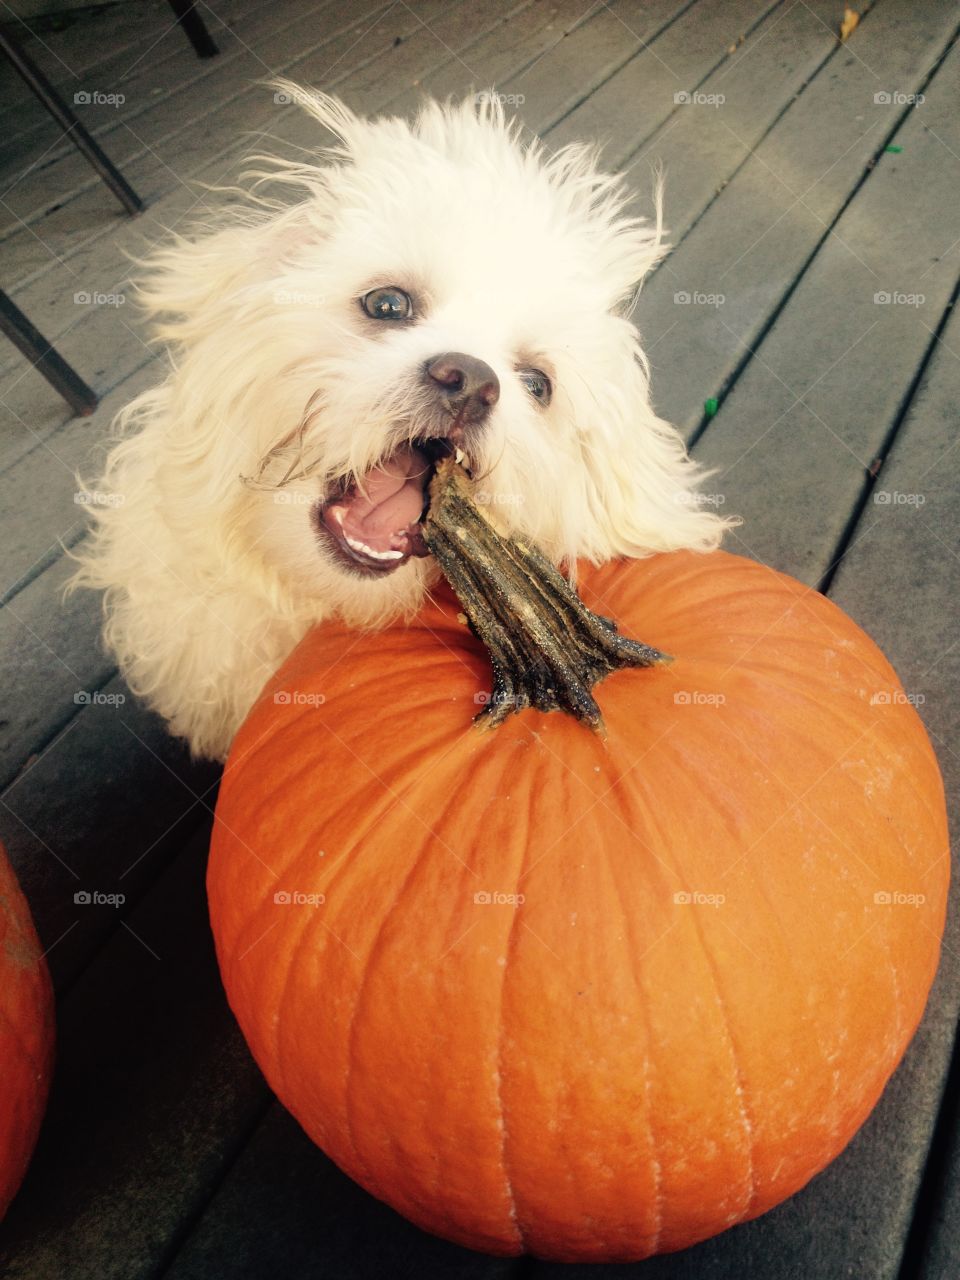 Cute puppy chomping on a bright orange pumpkin